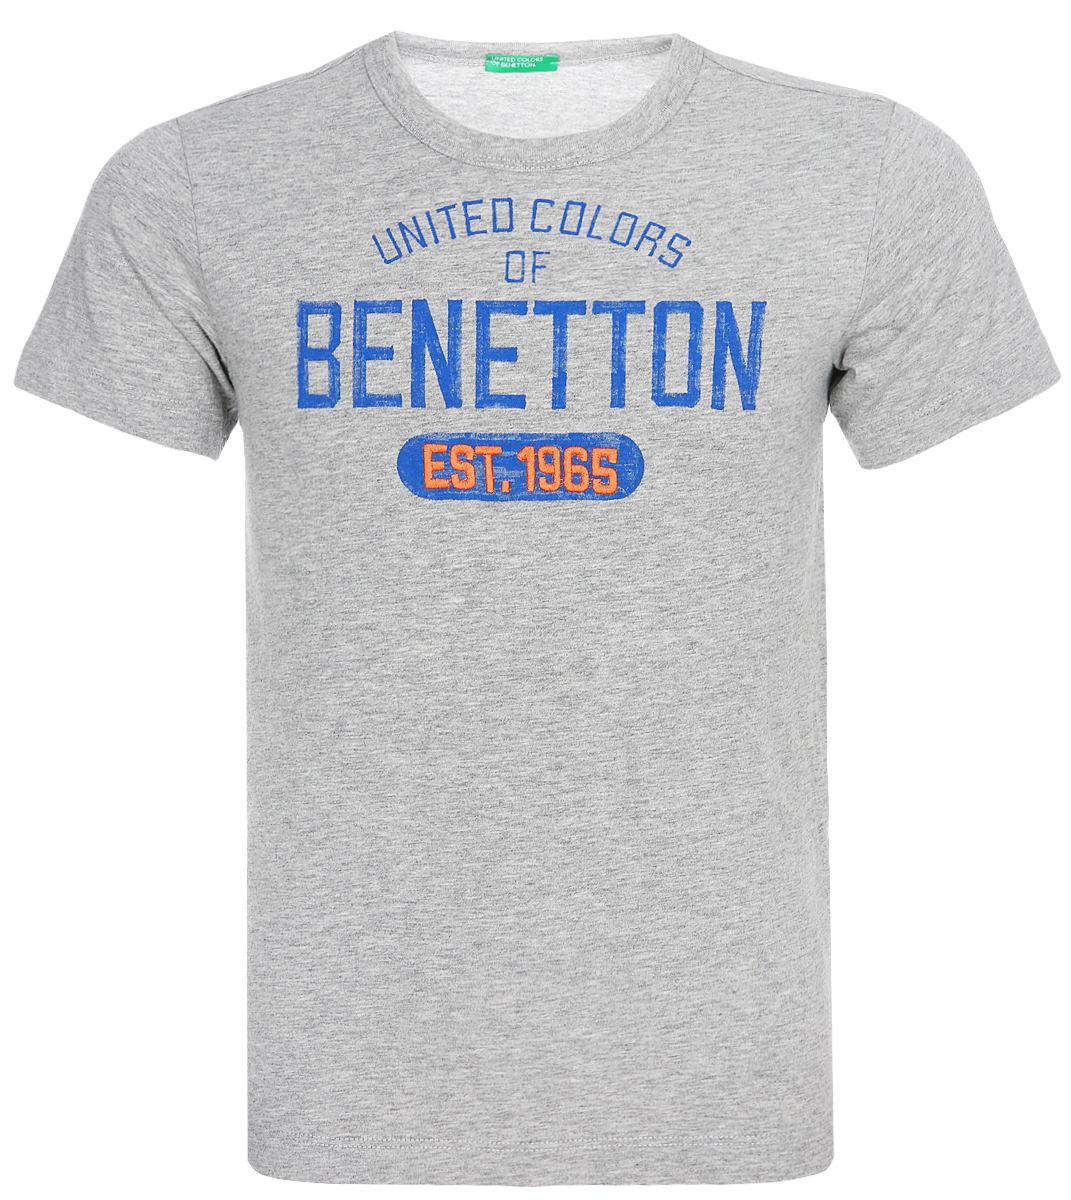 Футболка для мальчика United Colors of Benetton, цвет: серый. 3I1XC13NW_501. Размер 130